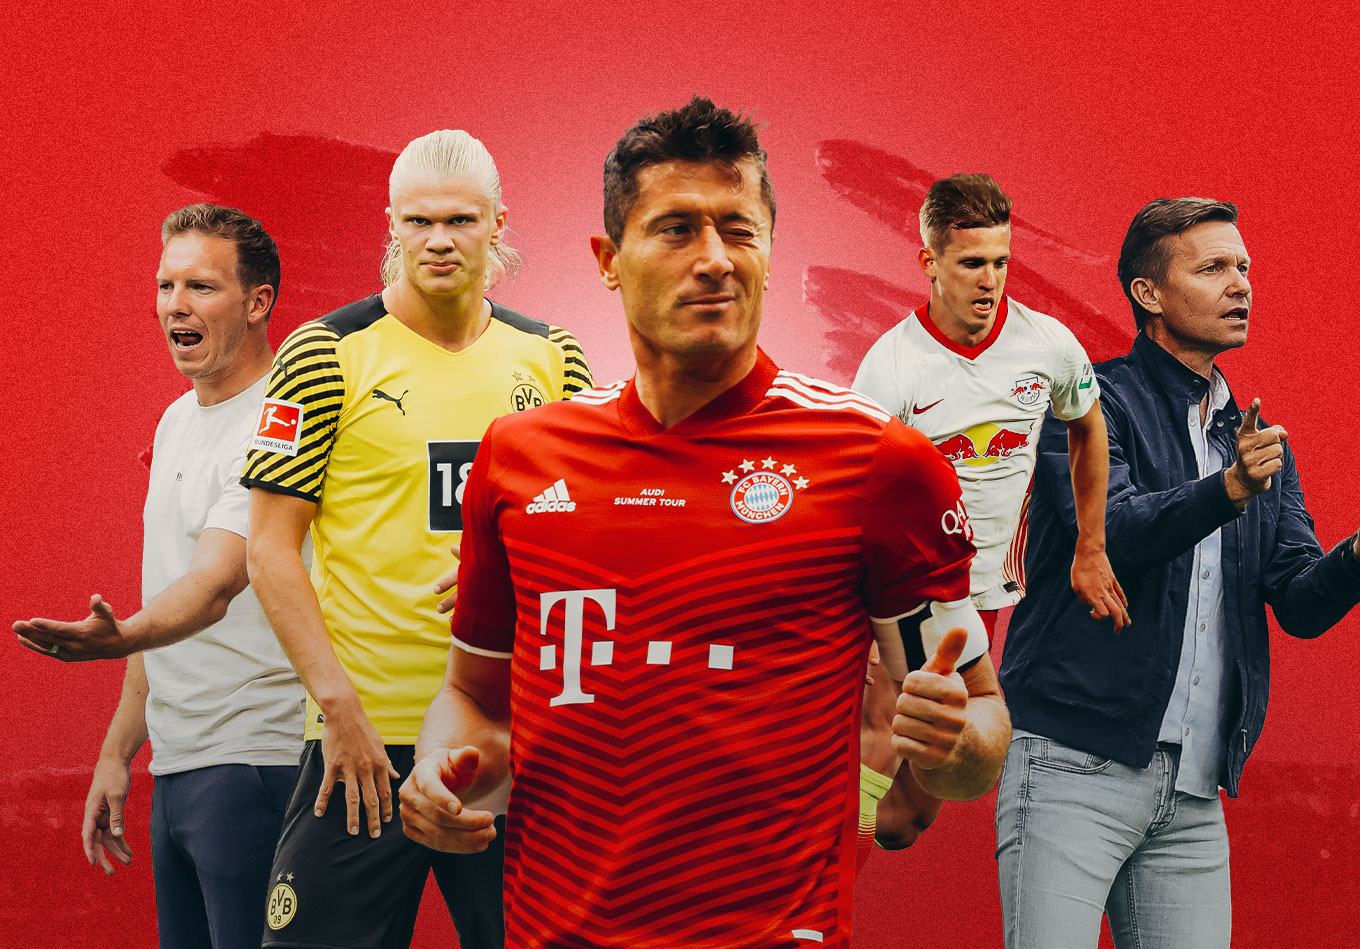 Bundesliga Season Preview: Can Anyone Stop Bayern? - The Analyst